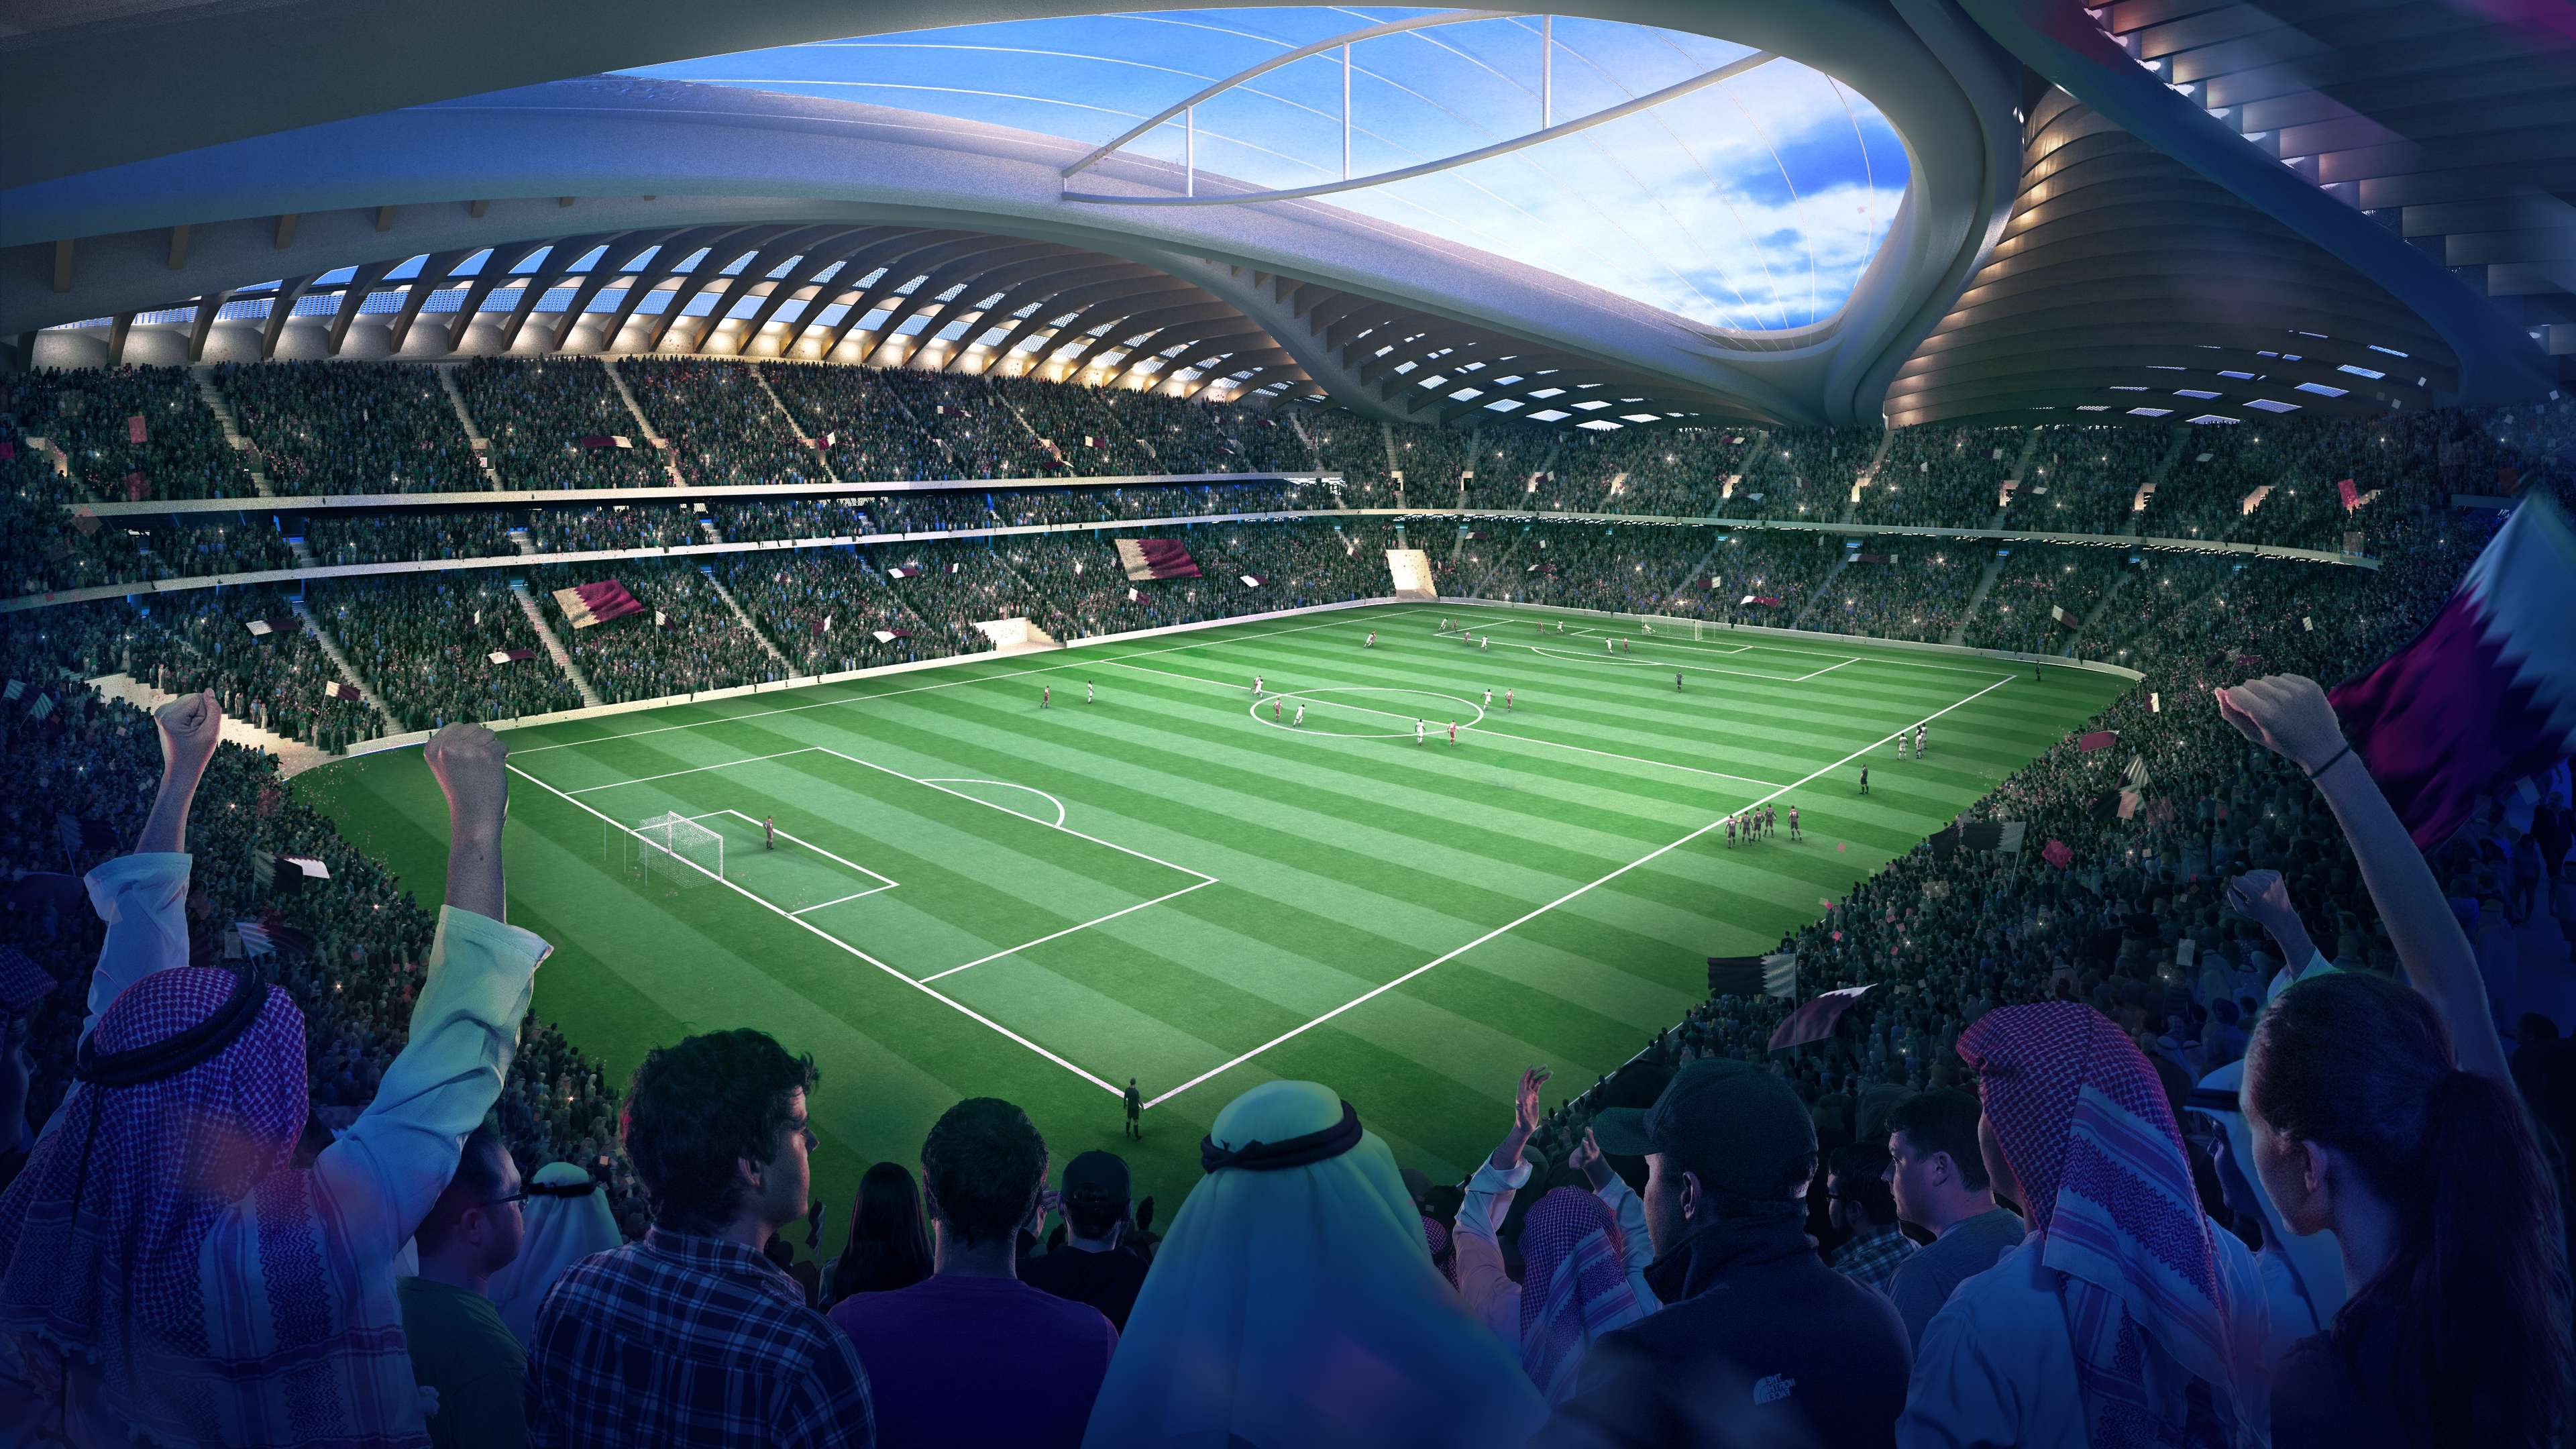 Qatar Stadium relay